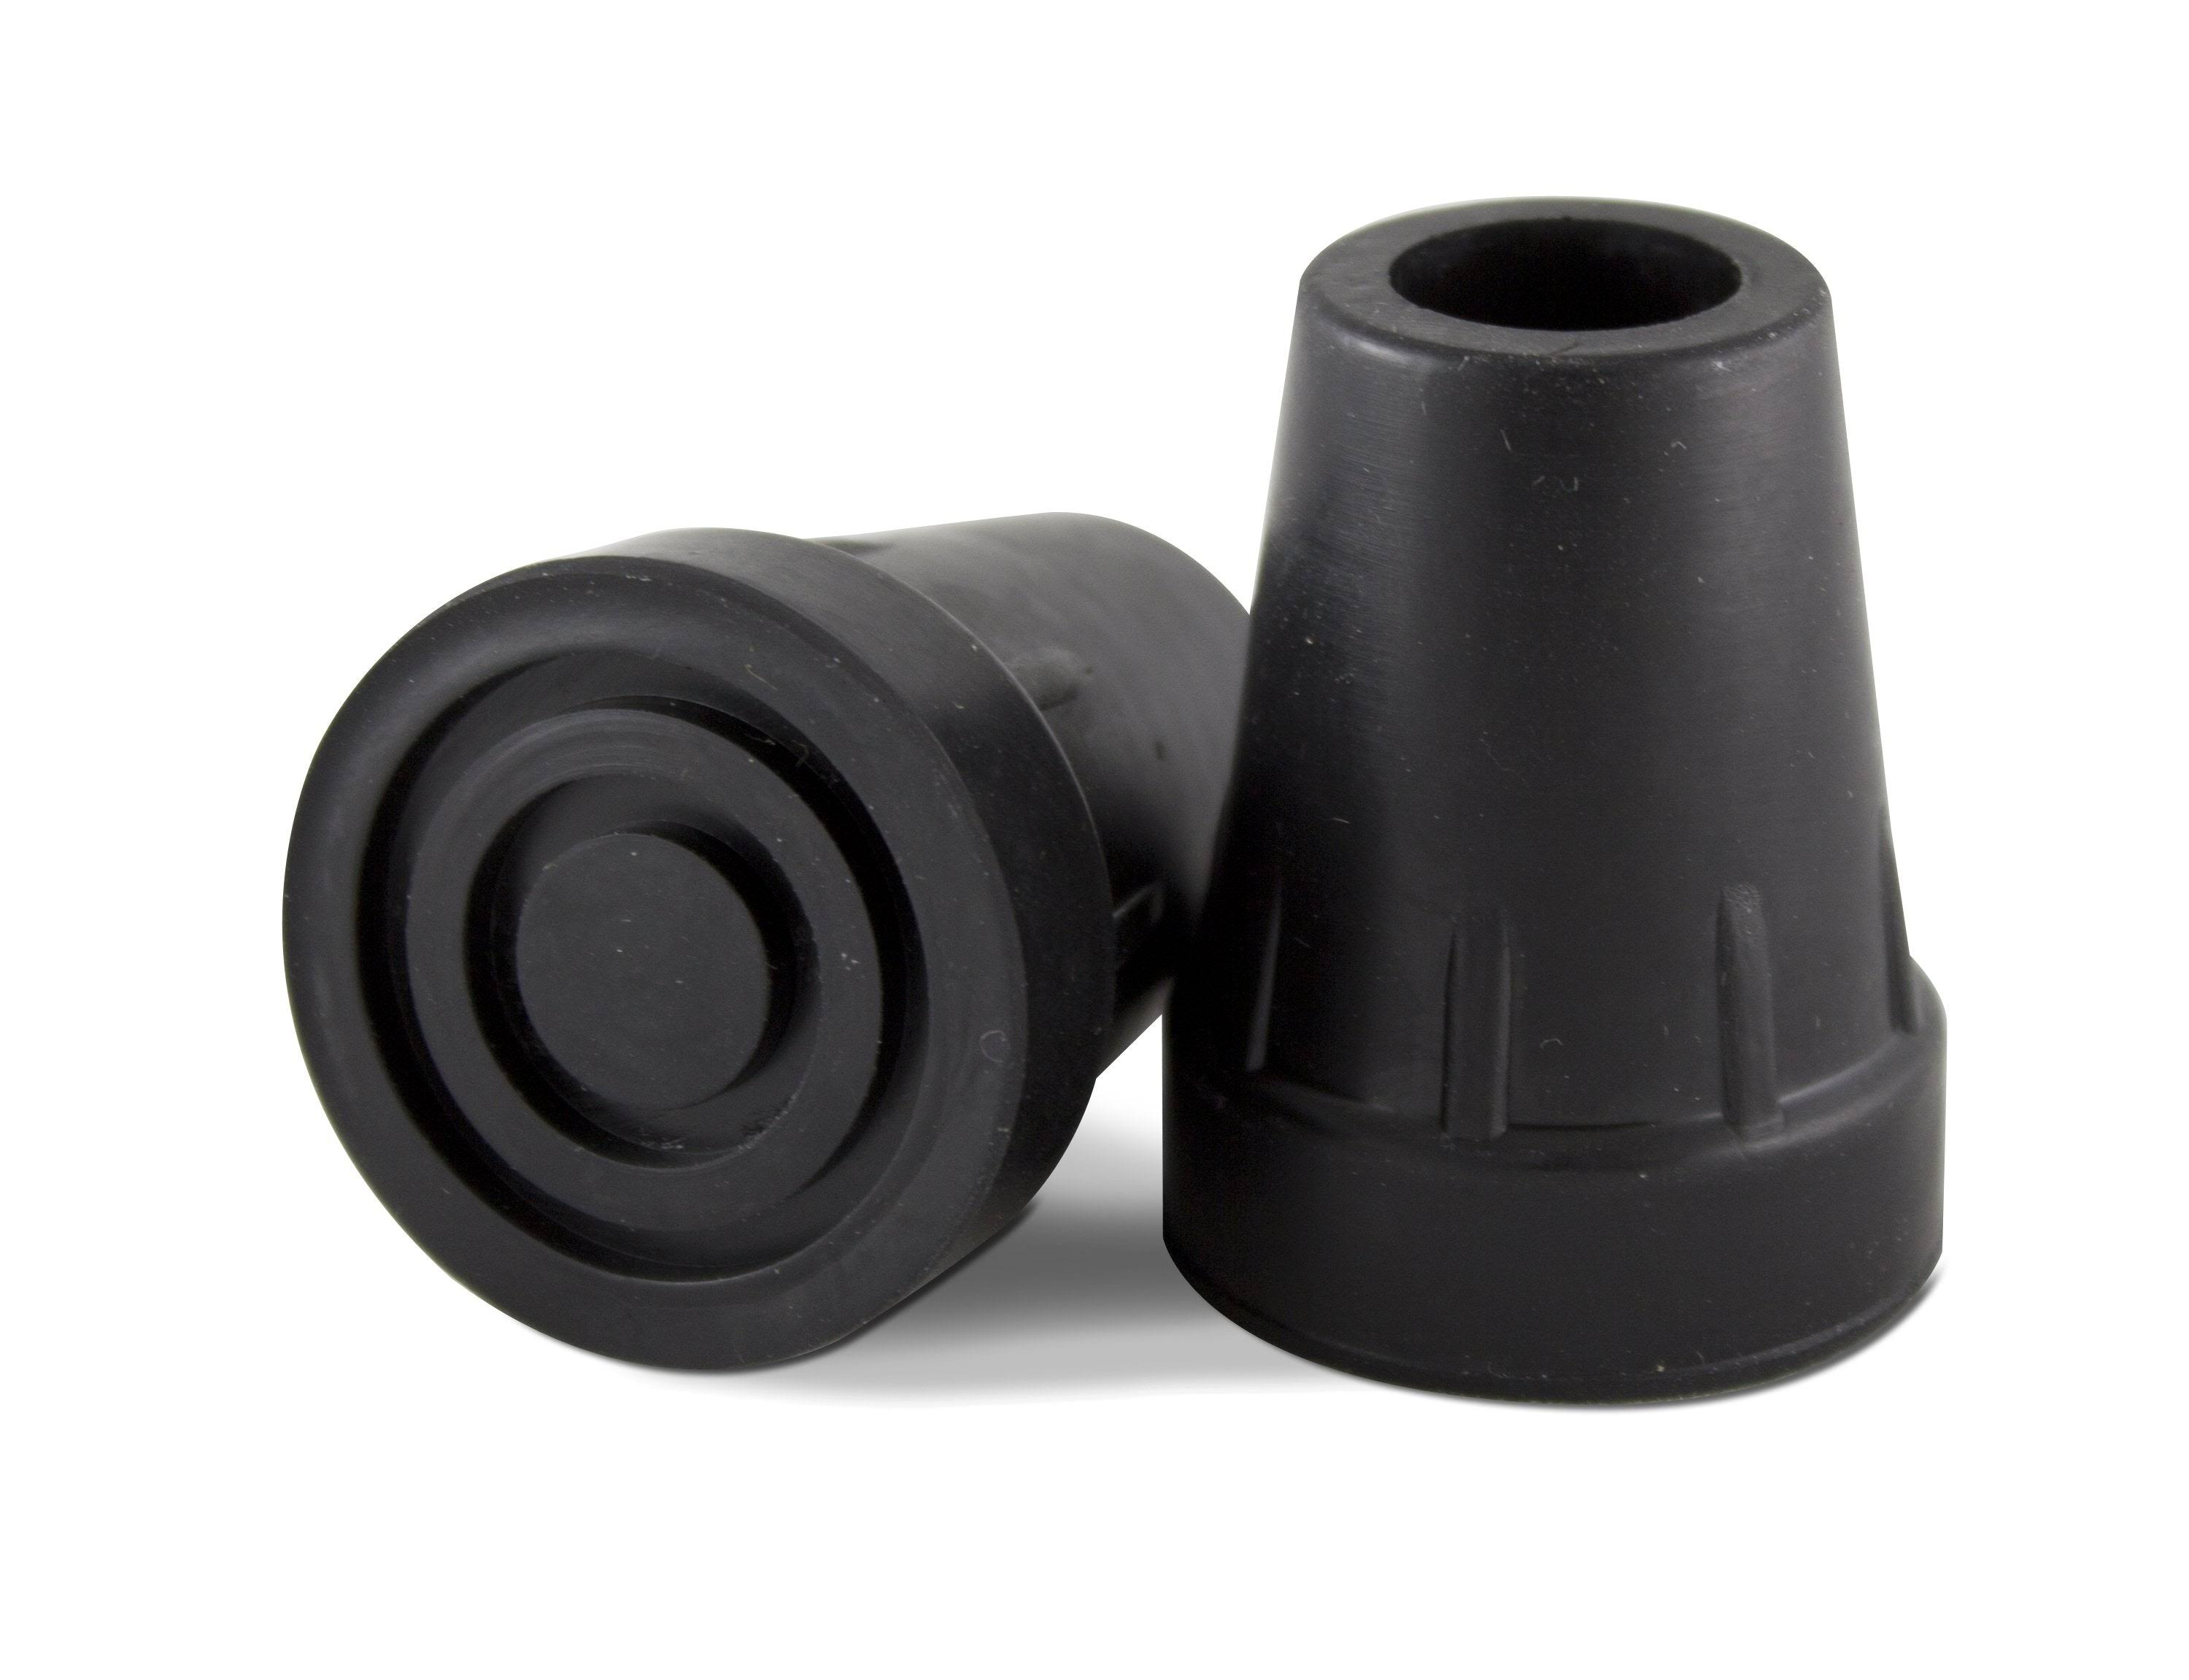 Essential Medical Supply Cane Tips - Black, 1.6cm